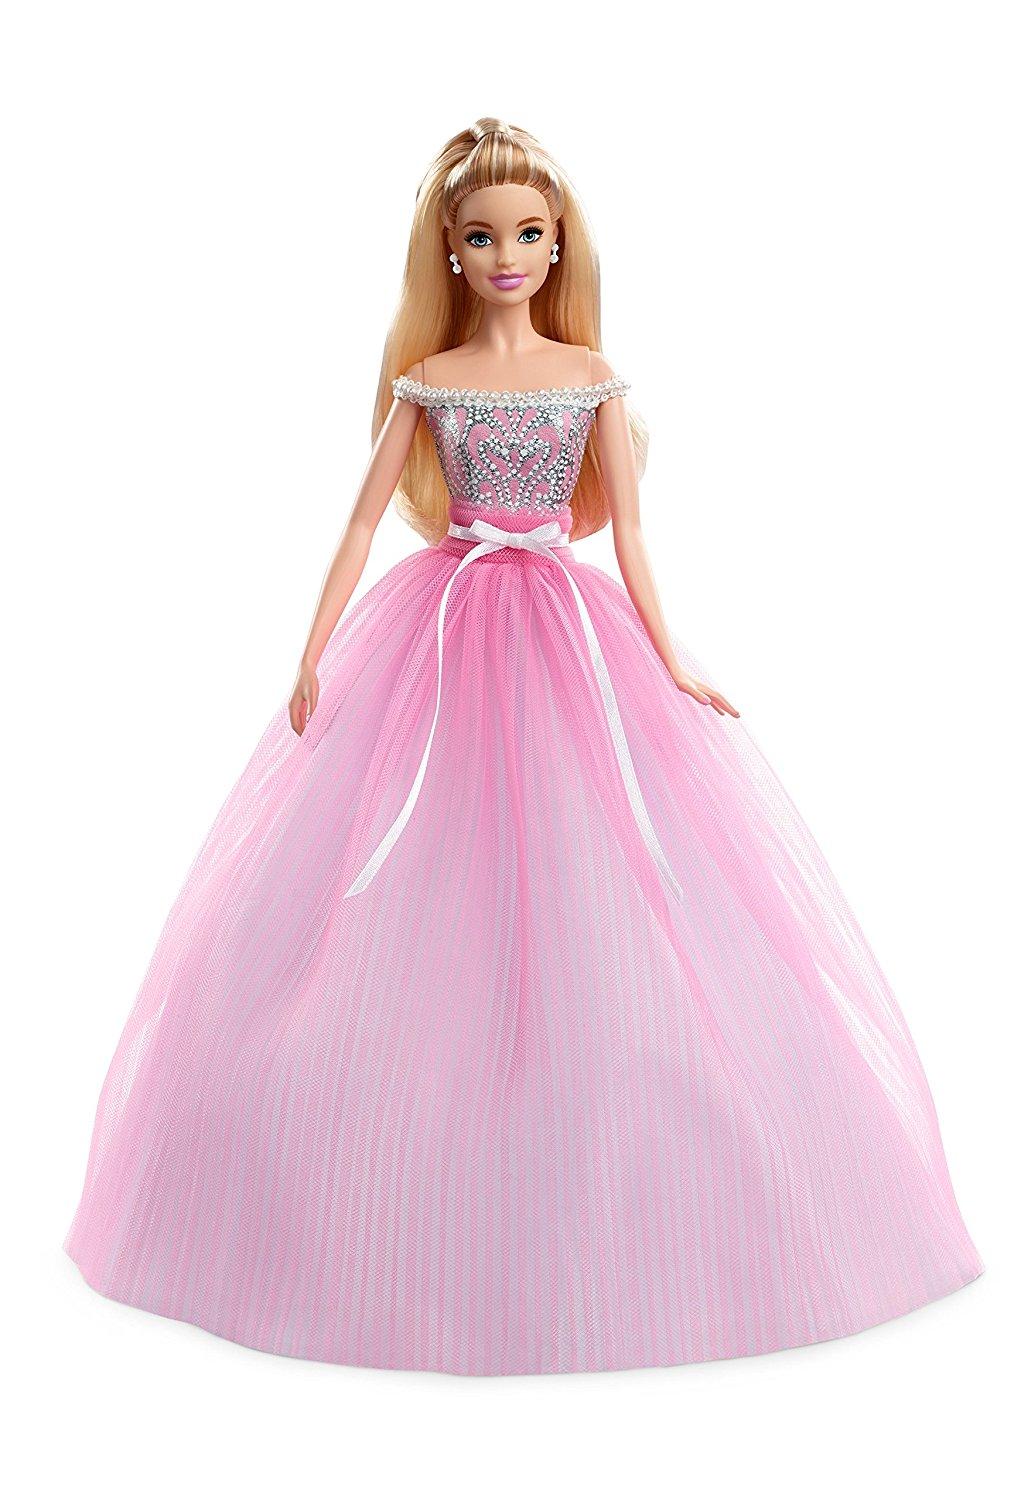 barbie 纪念版绝版芭比娃娃公主时装!小时候生日最想收到的